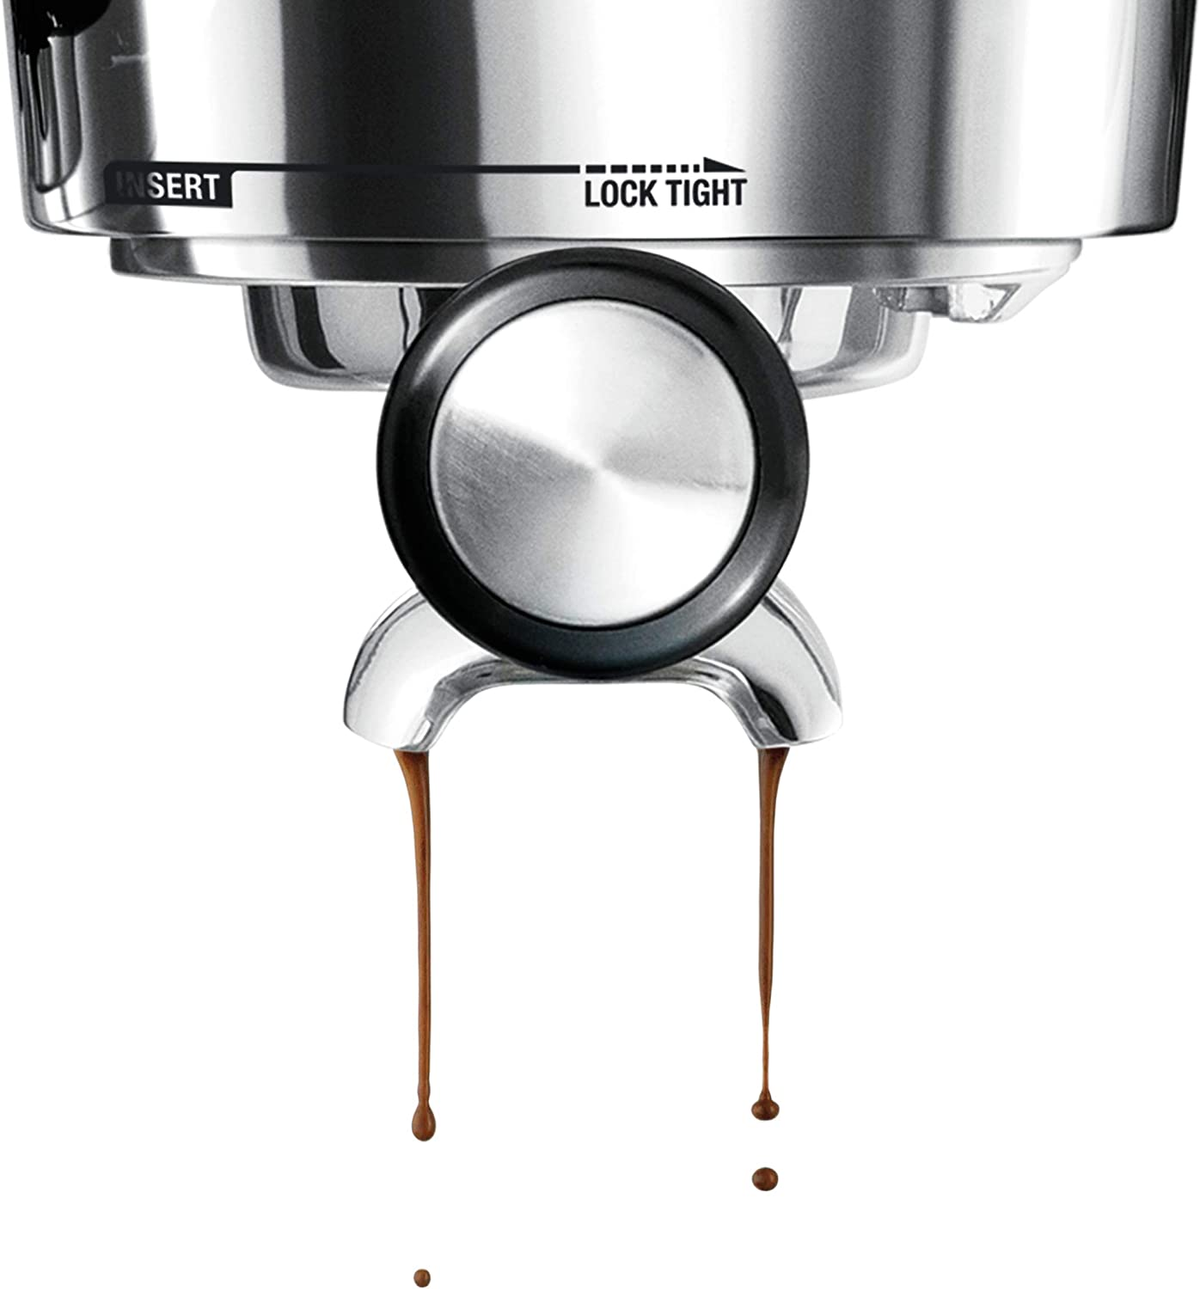 SAGE APPLIANCES SES920BTR4EEU1 DUAL THE Espressomaschine BOILER BLACK Schwarz Matt TRUFFLE